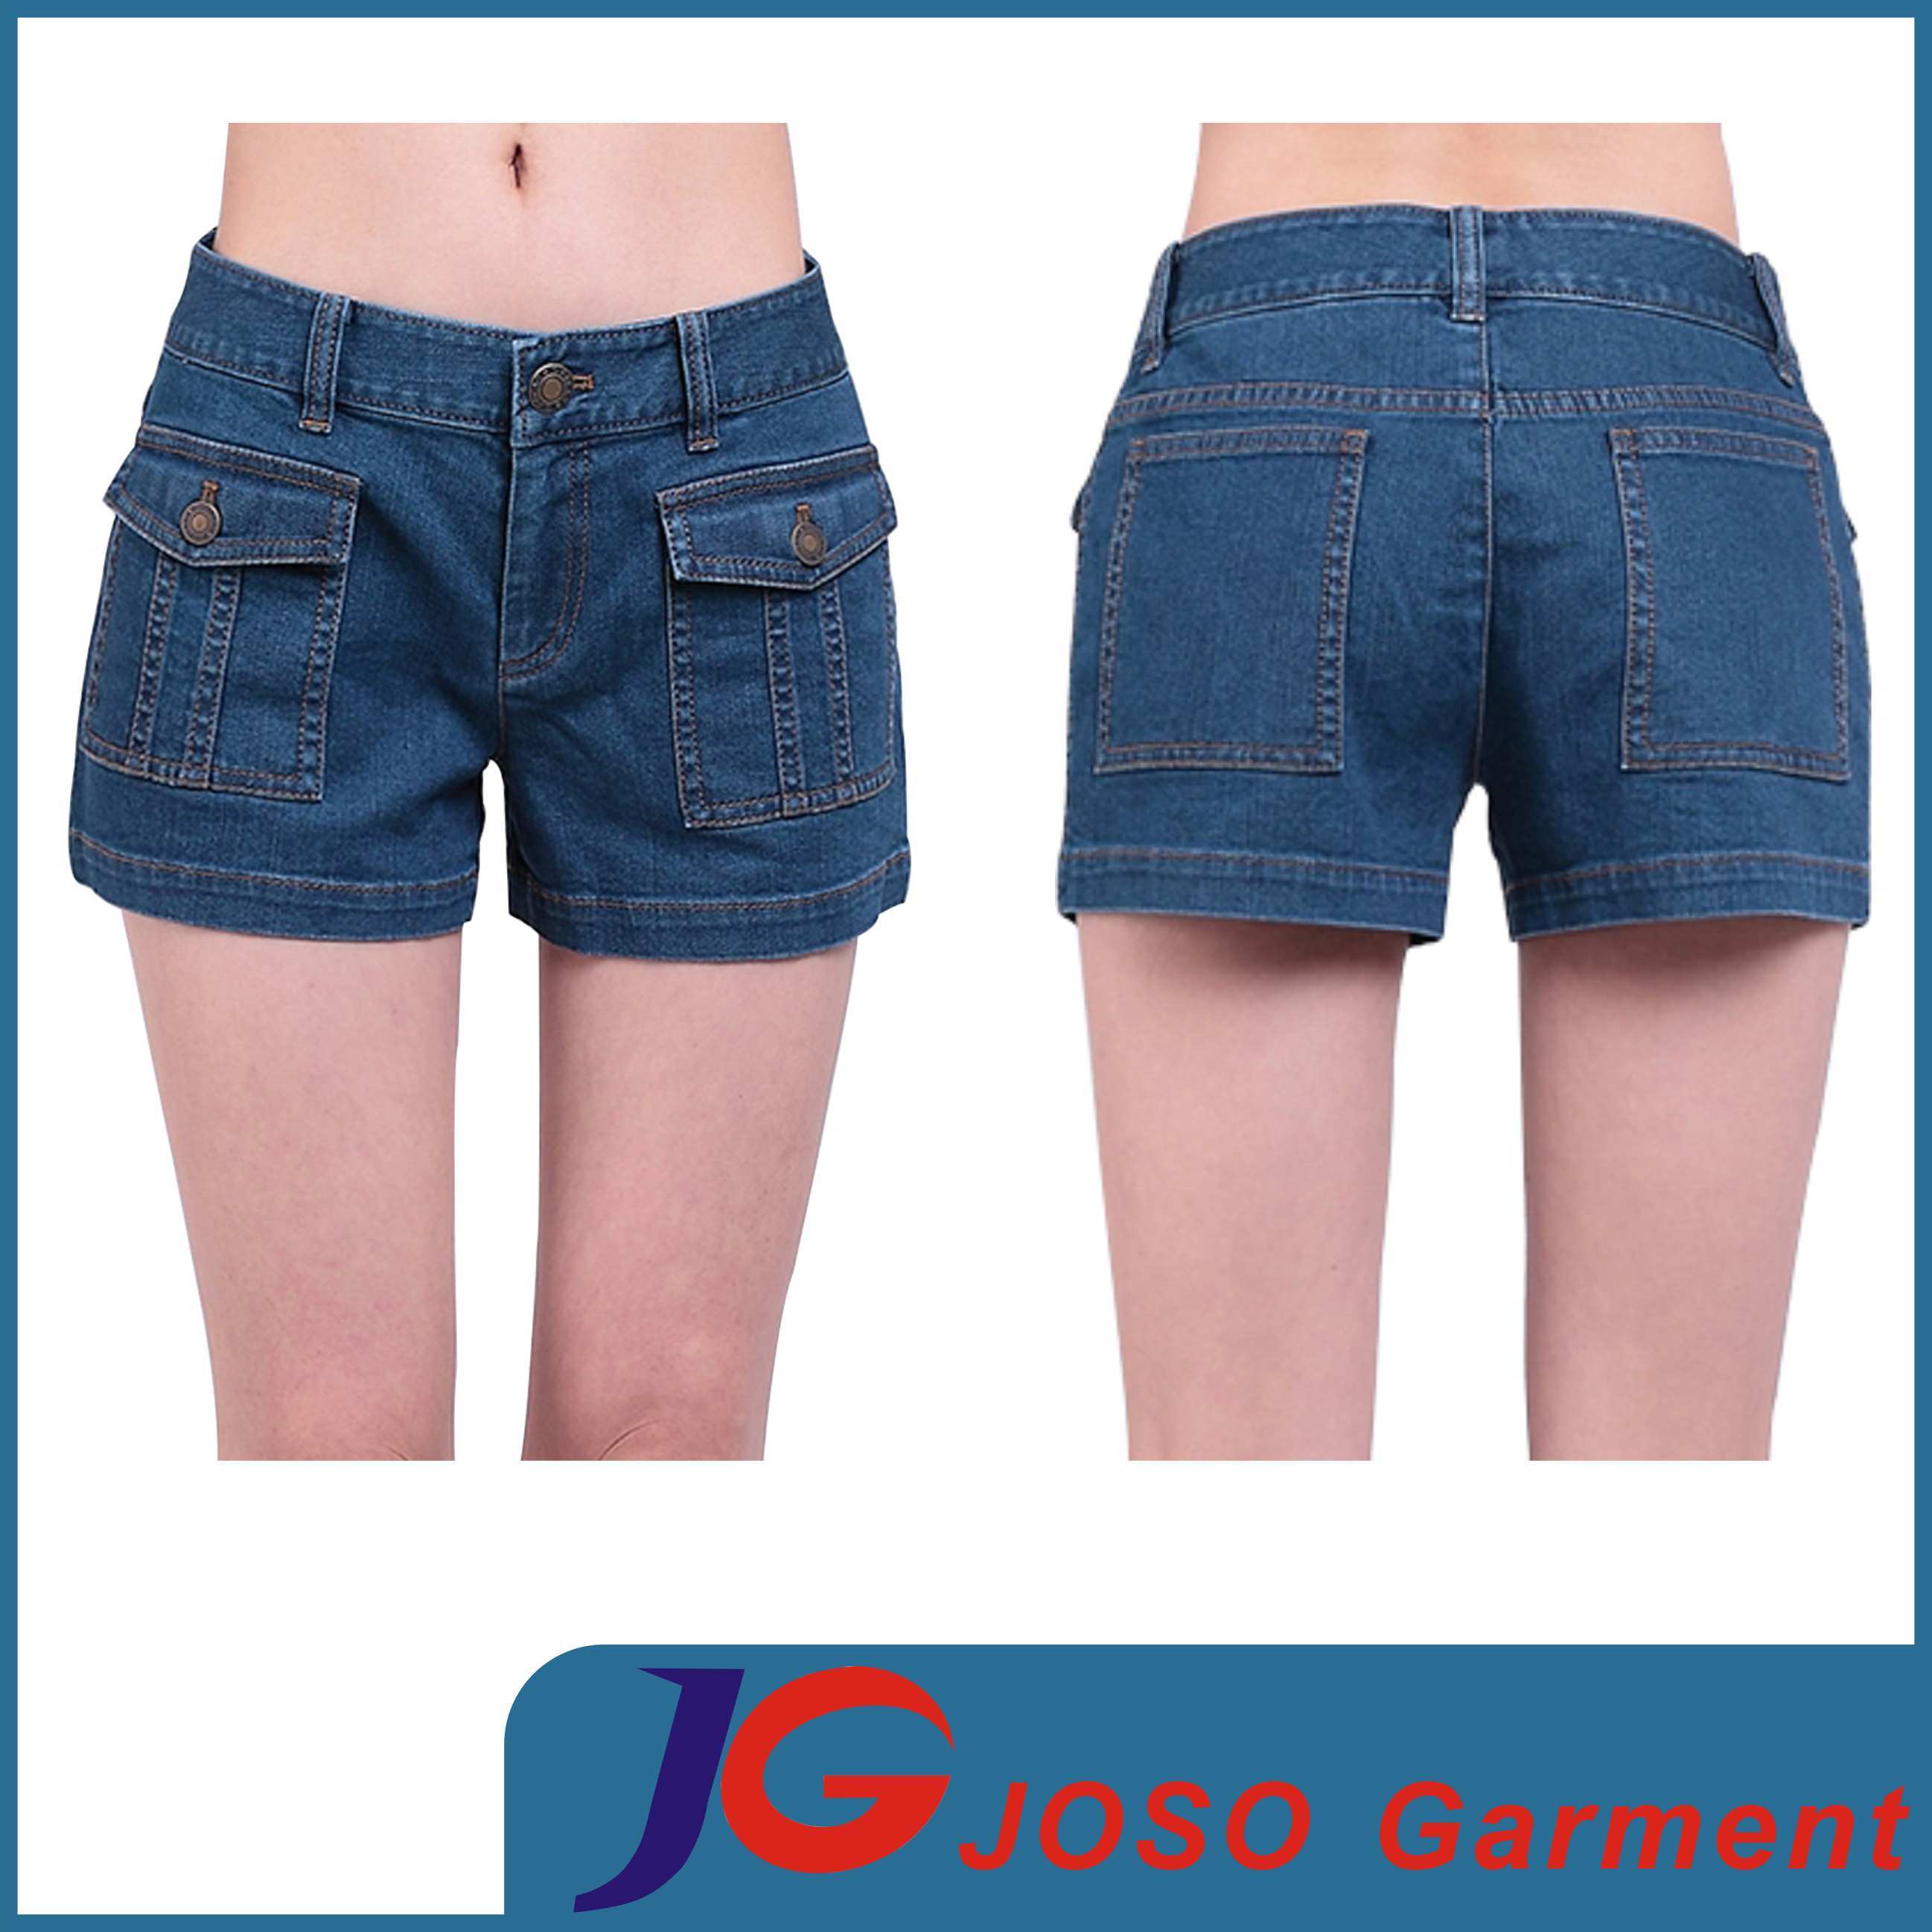 Women Denim Two Front Pockets Cargo Shorts (JC6083)